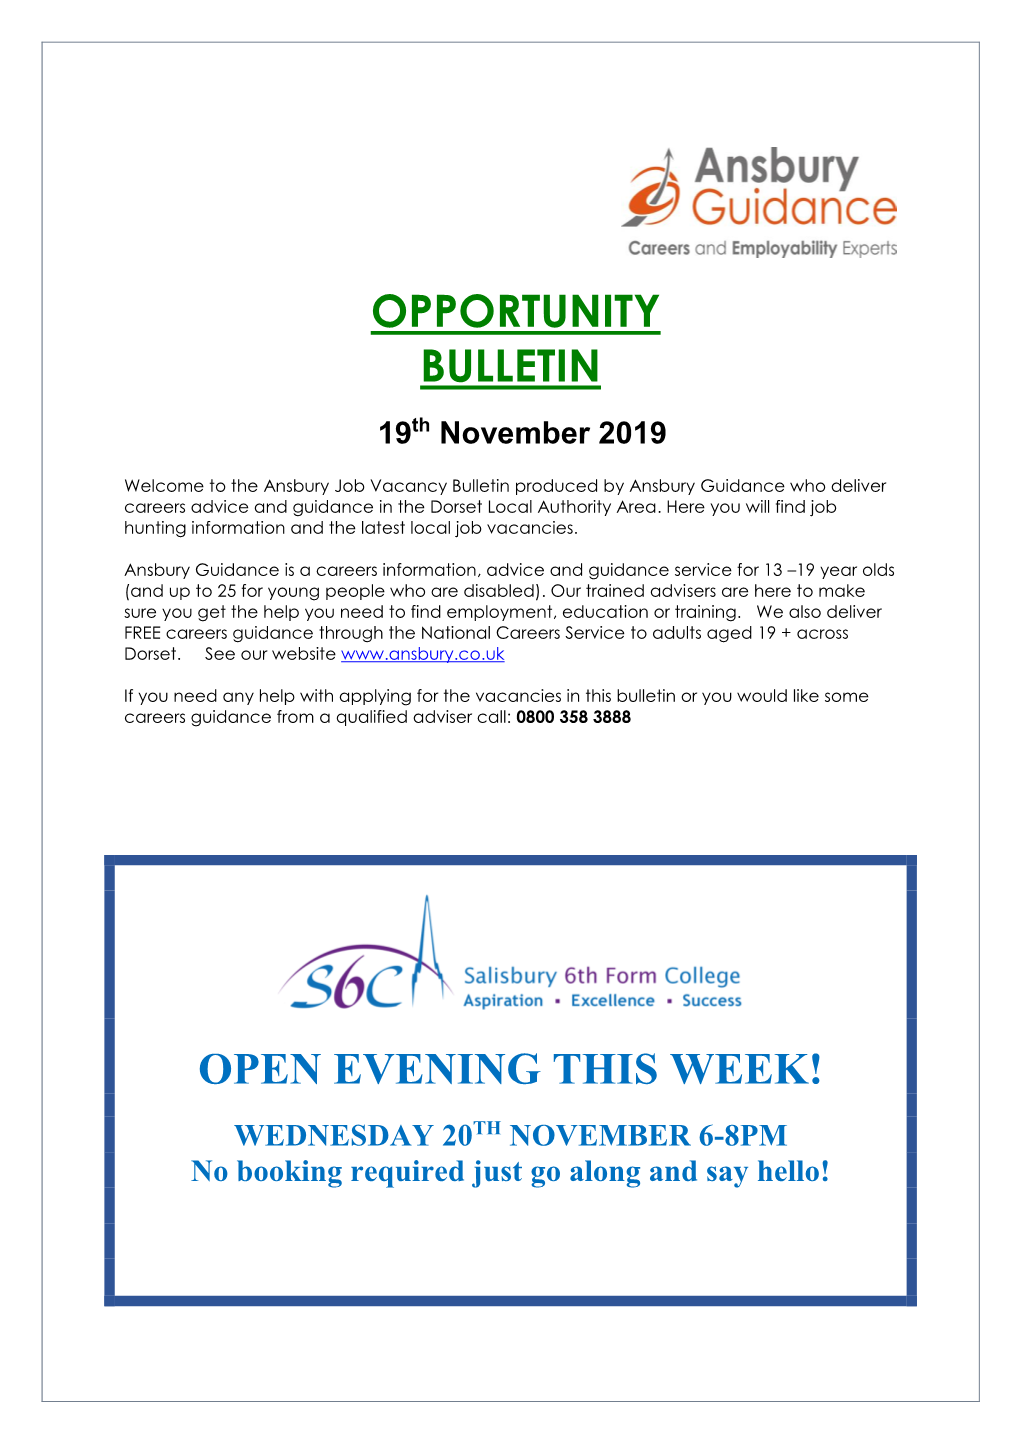 Opportunity Bulletin Open Evening